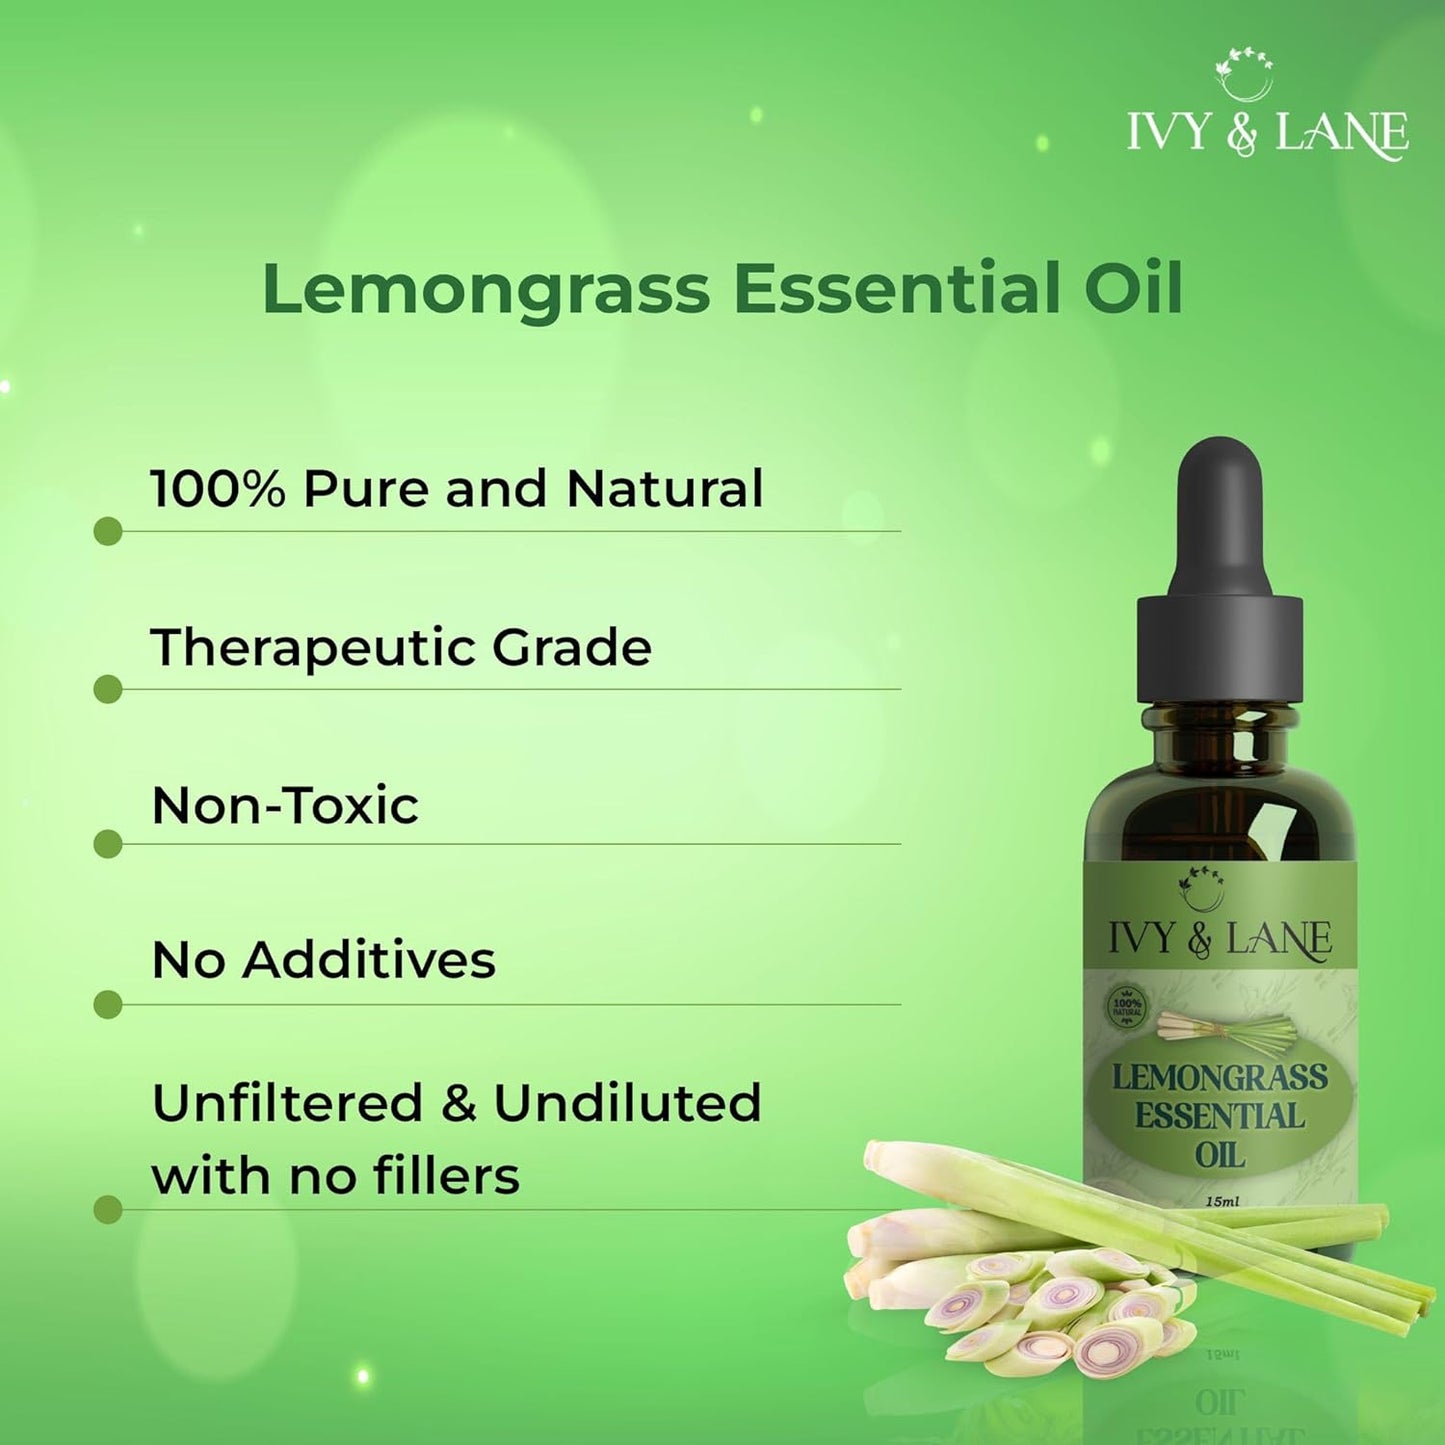 Ivy & Lane Lemon Grass Essential Oil